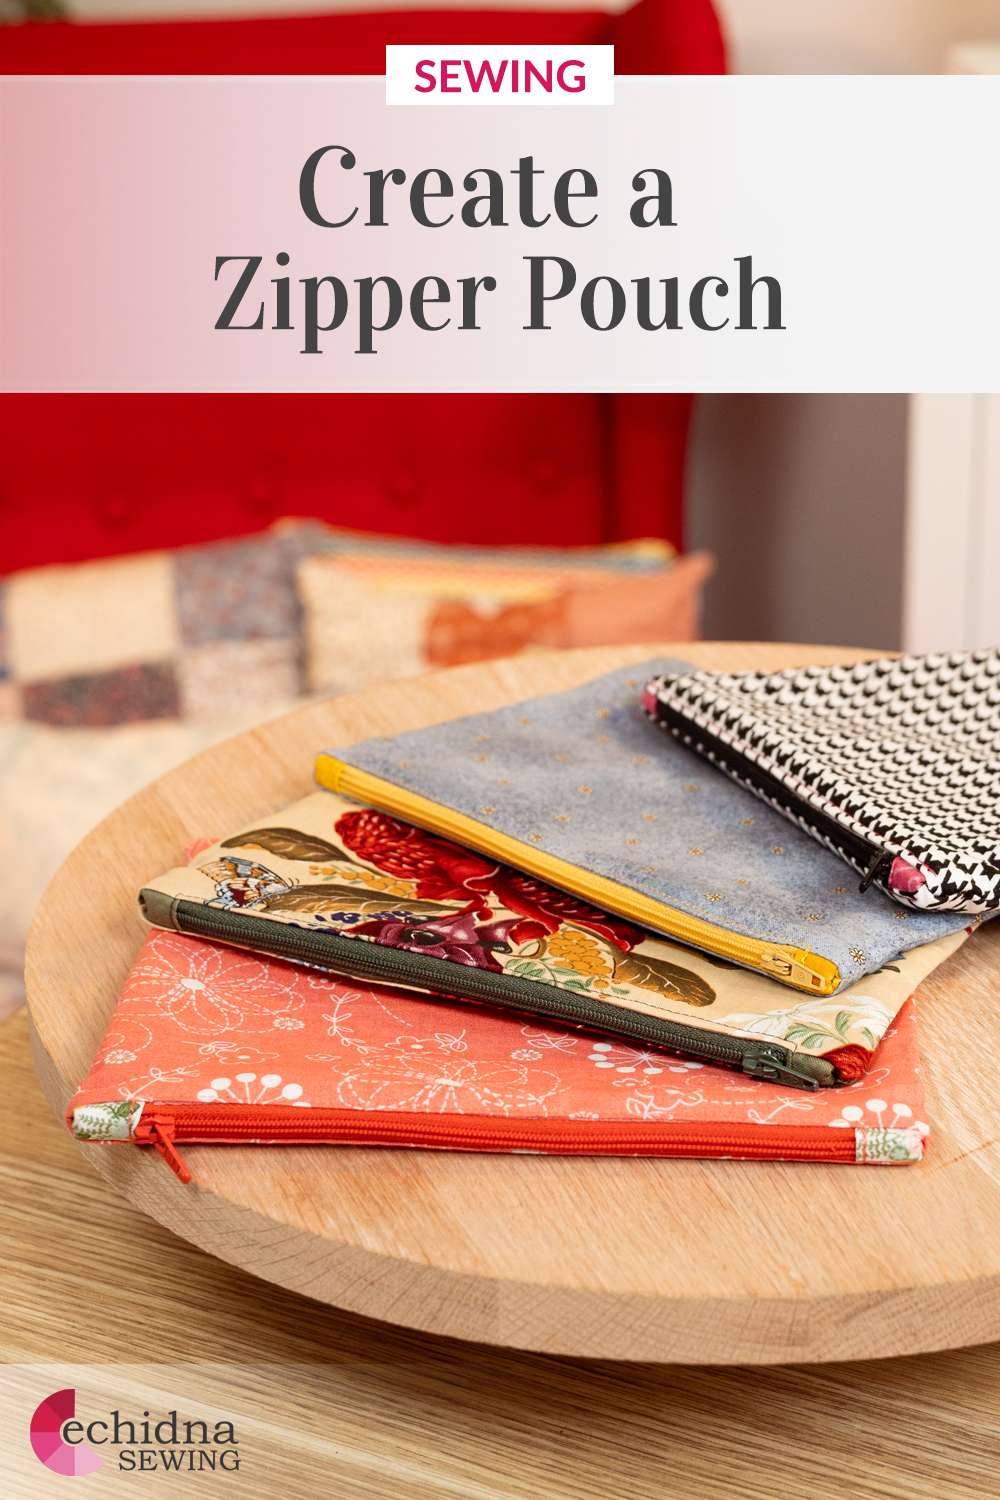 Zipper Pouch Project Pinterest